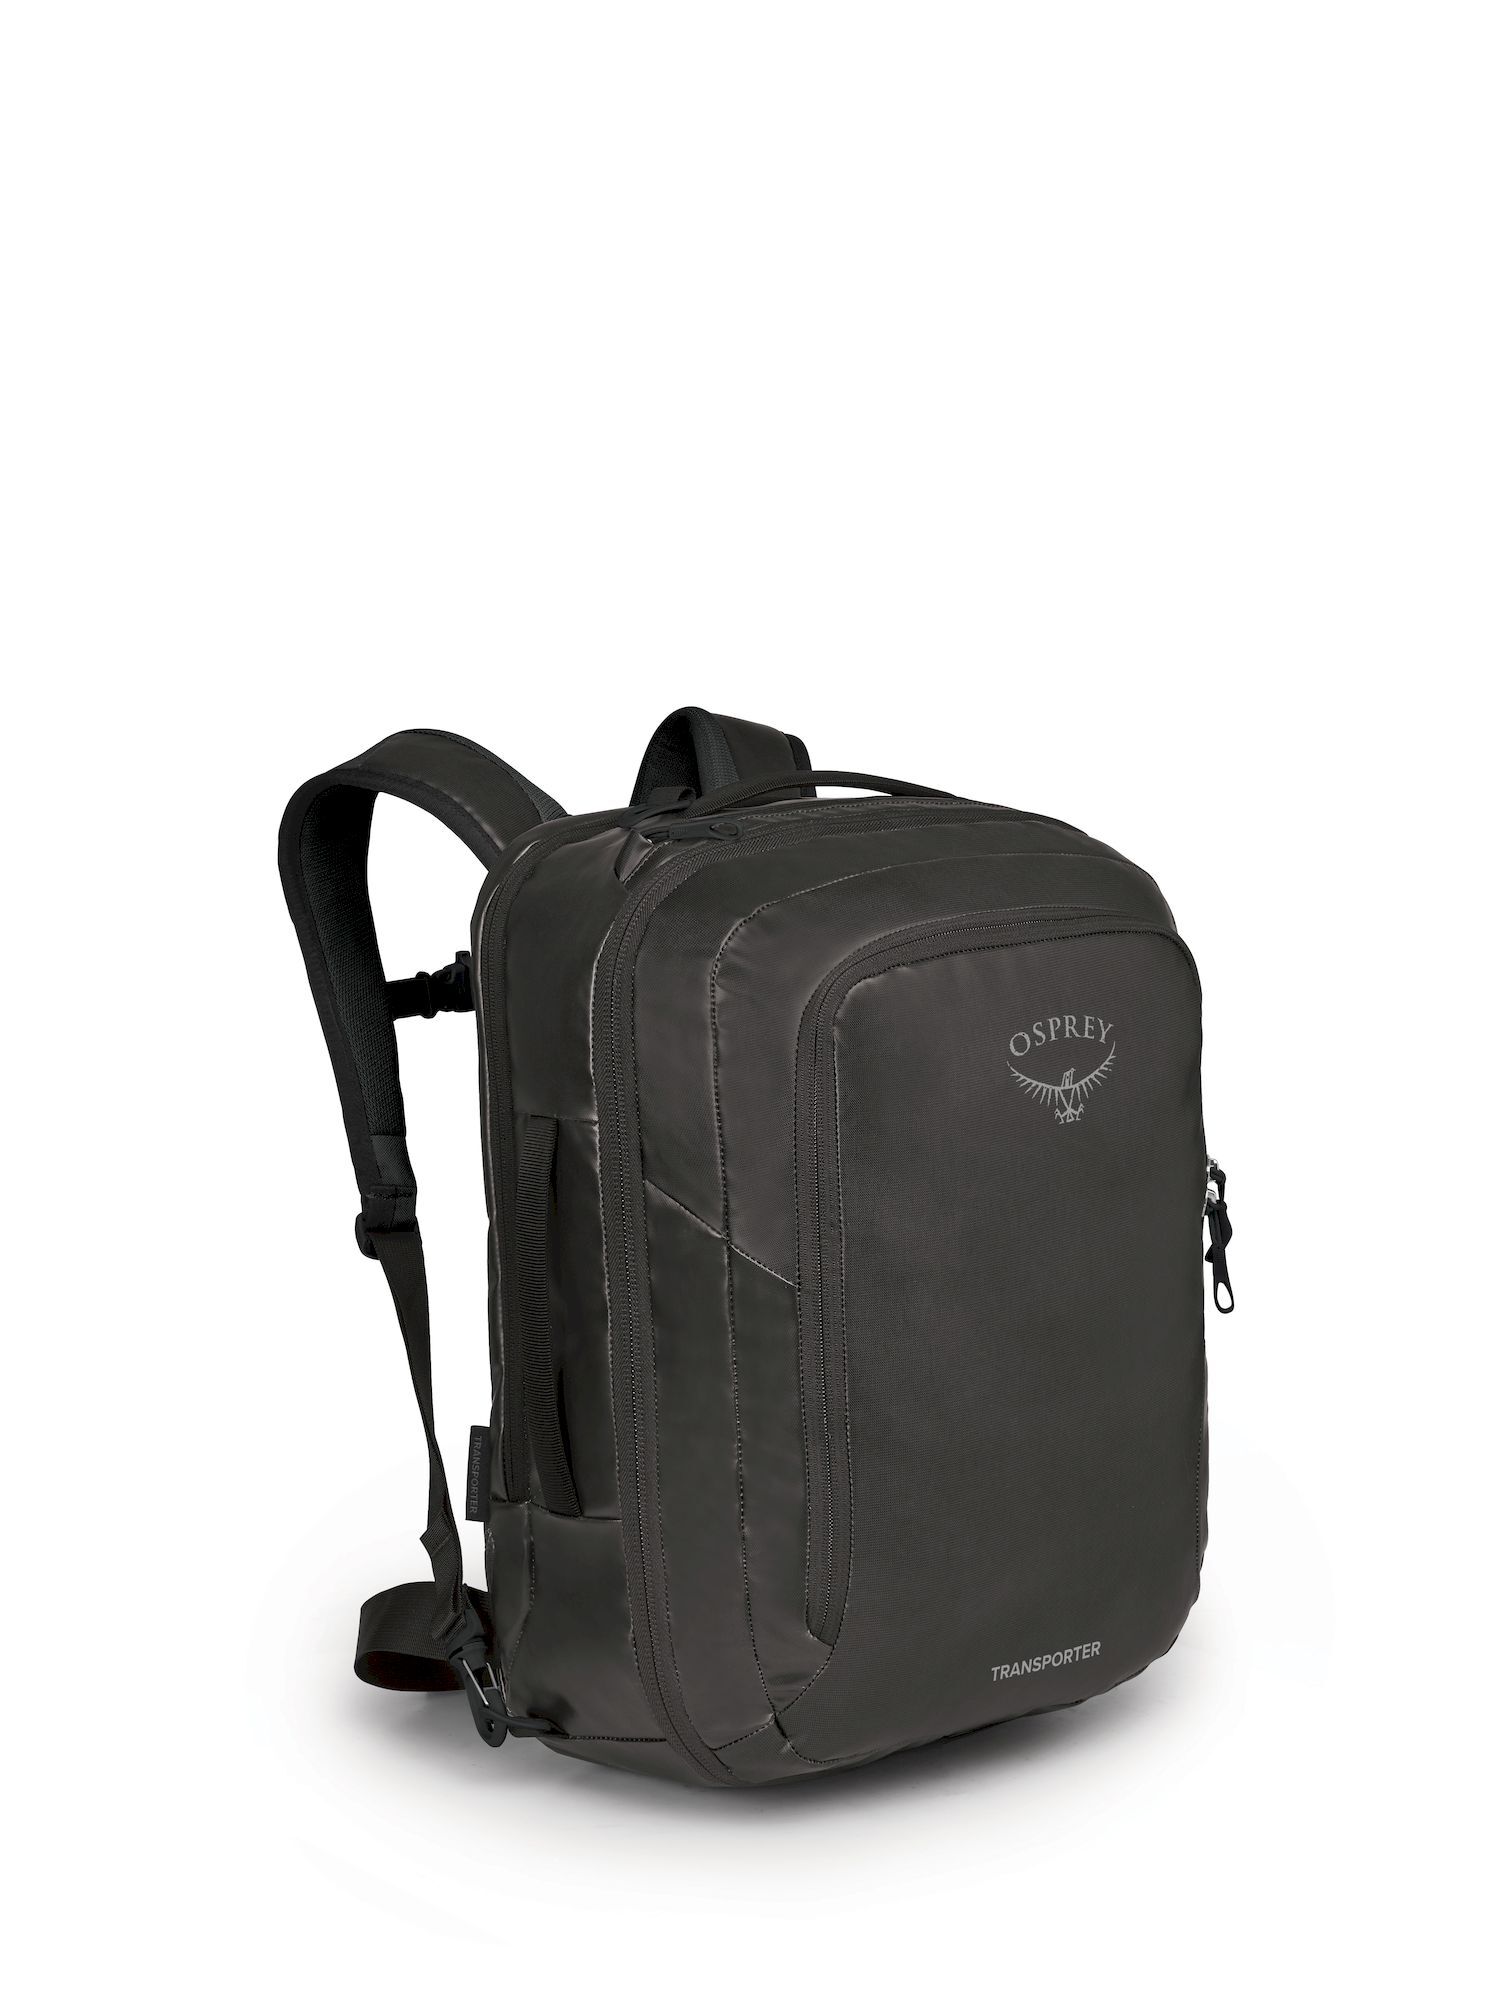 Osprey Transporter Global Carry-On Bag - Cestovní taška | Hardloop